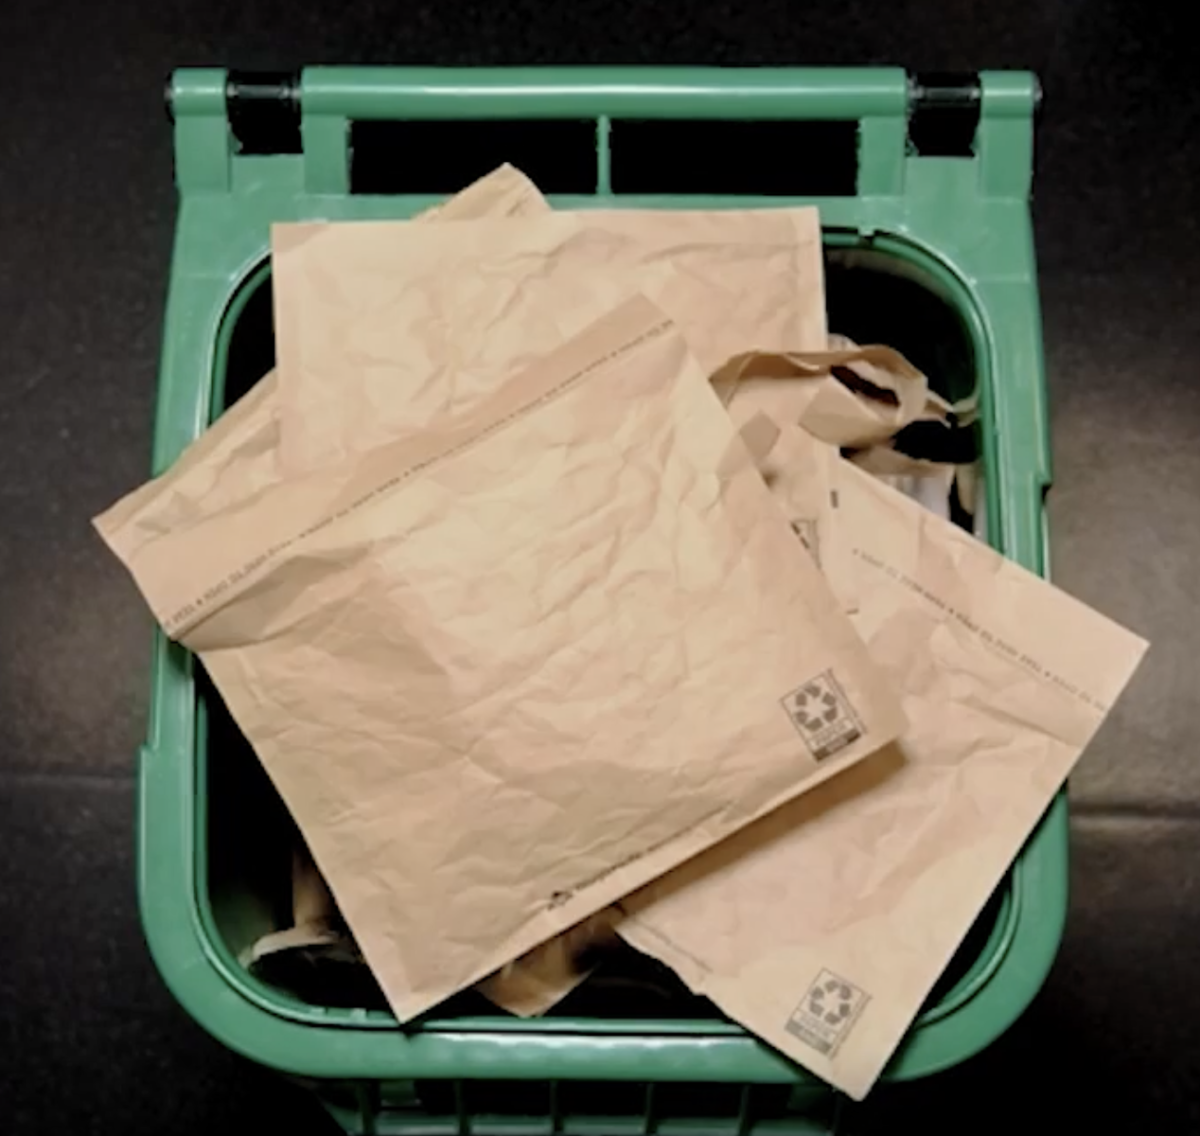 packages in recycling bin